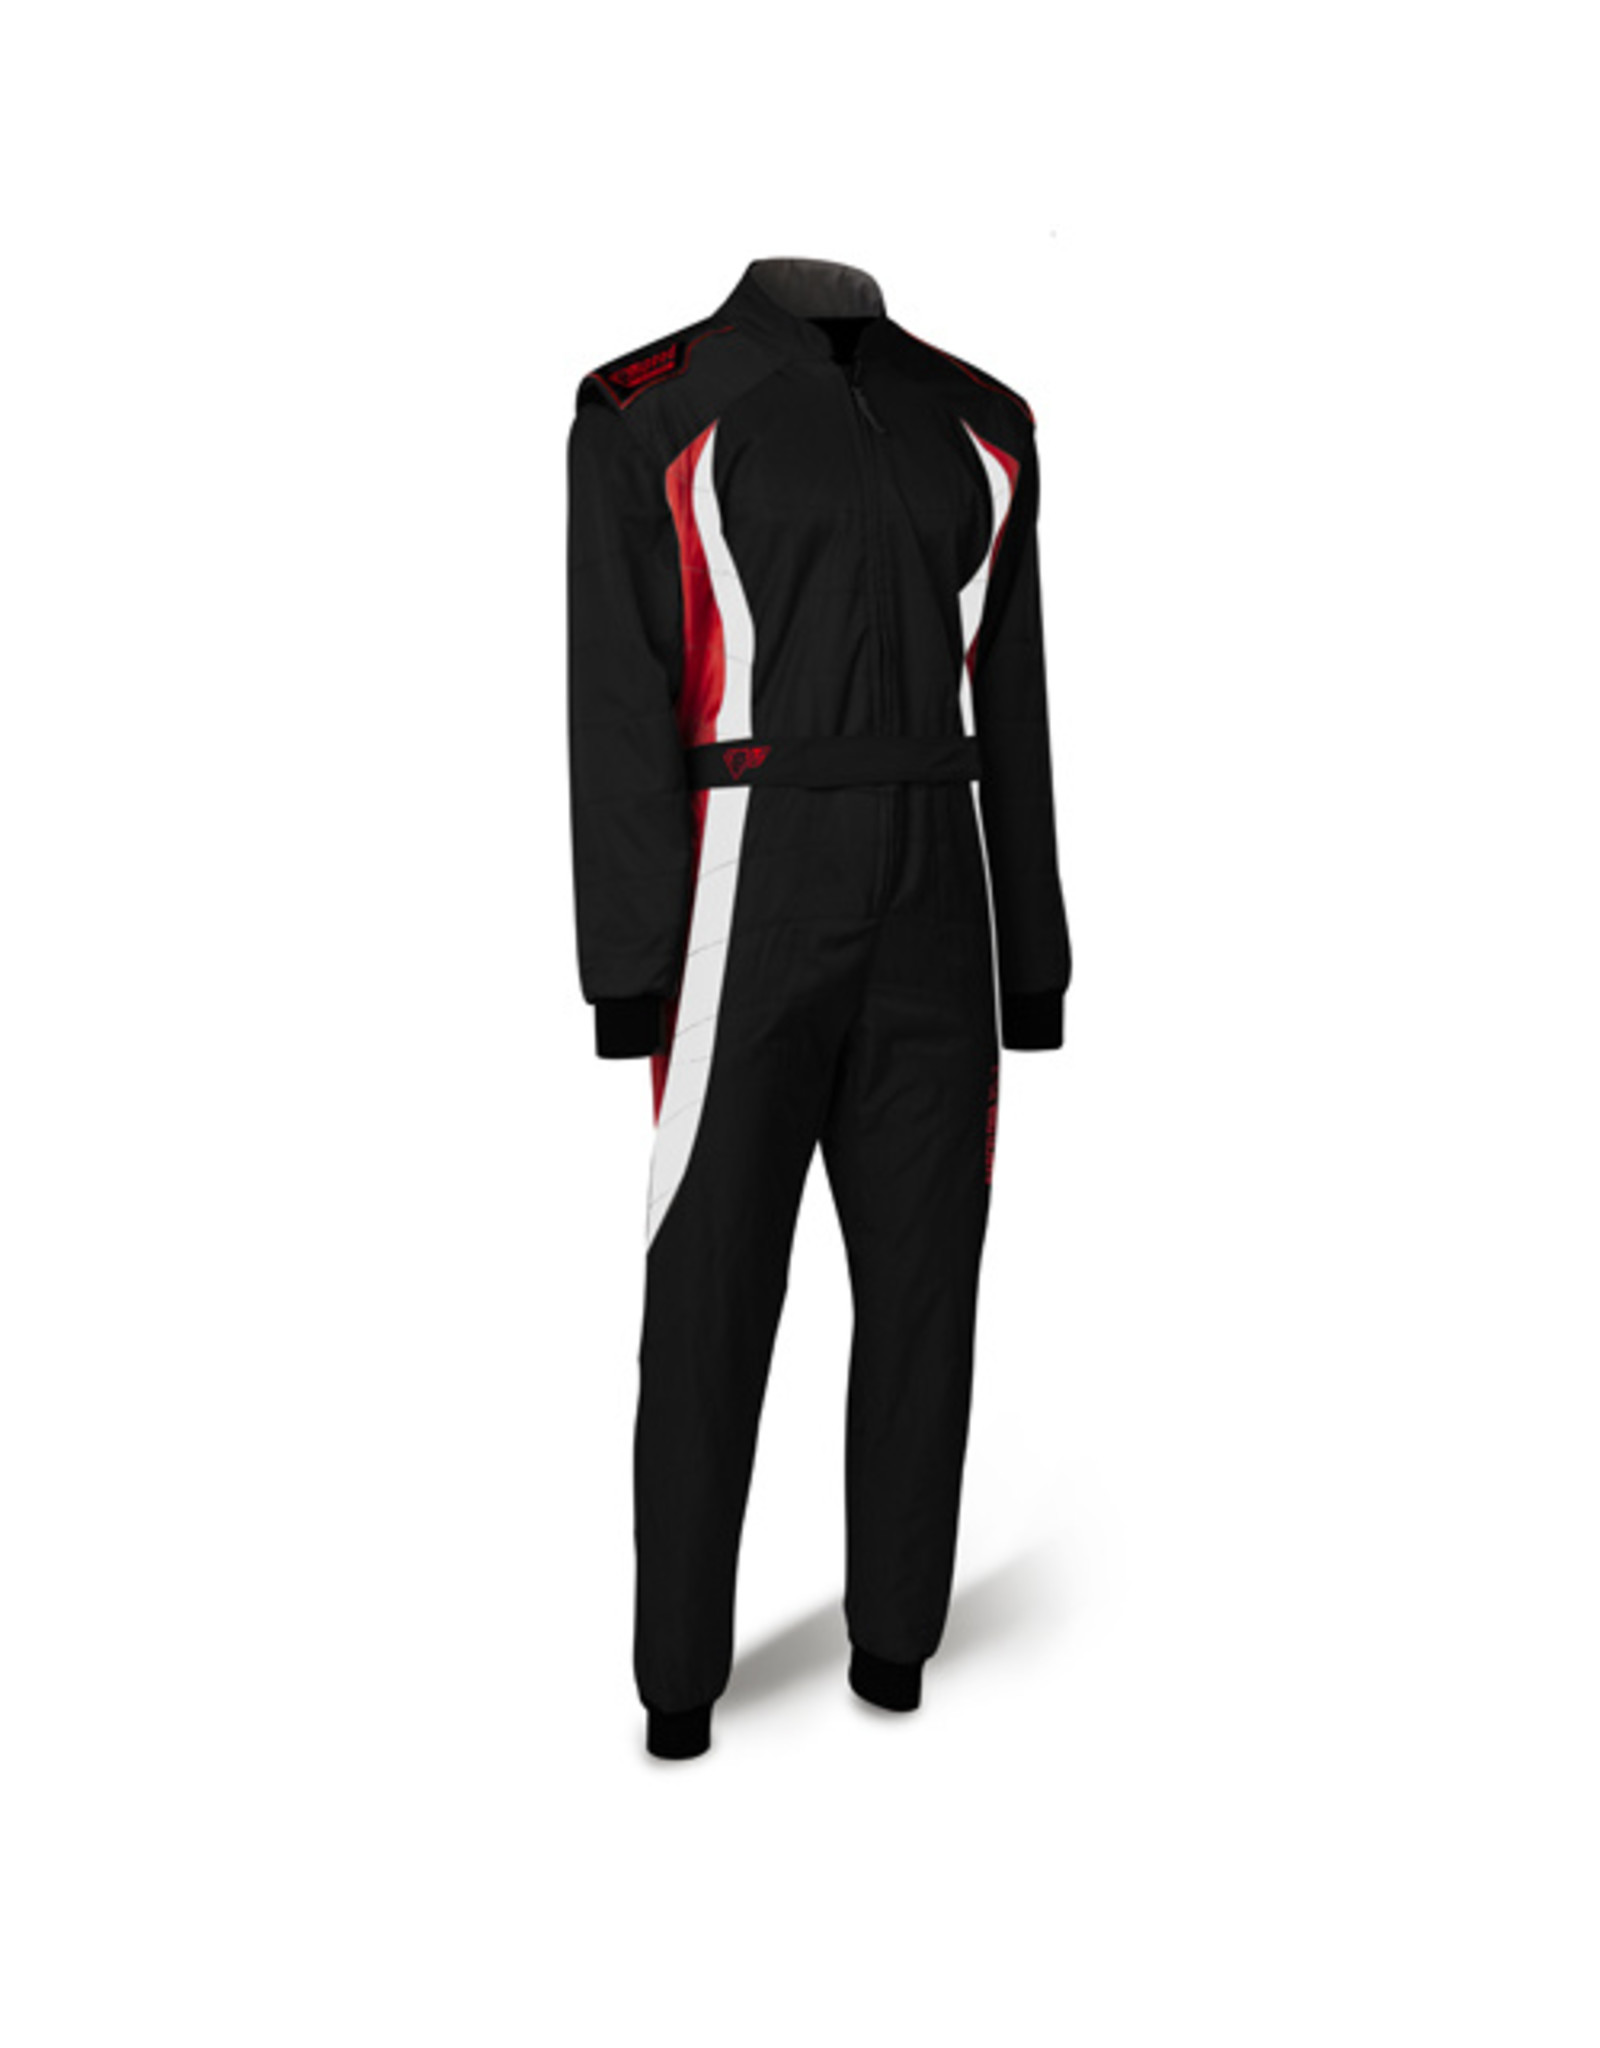 Speed Racewear Speed LVL2 suit RS-3 Barcelona black / white / red